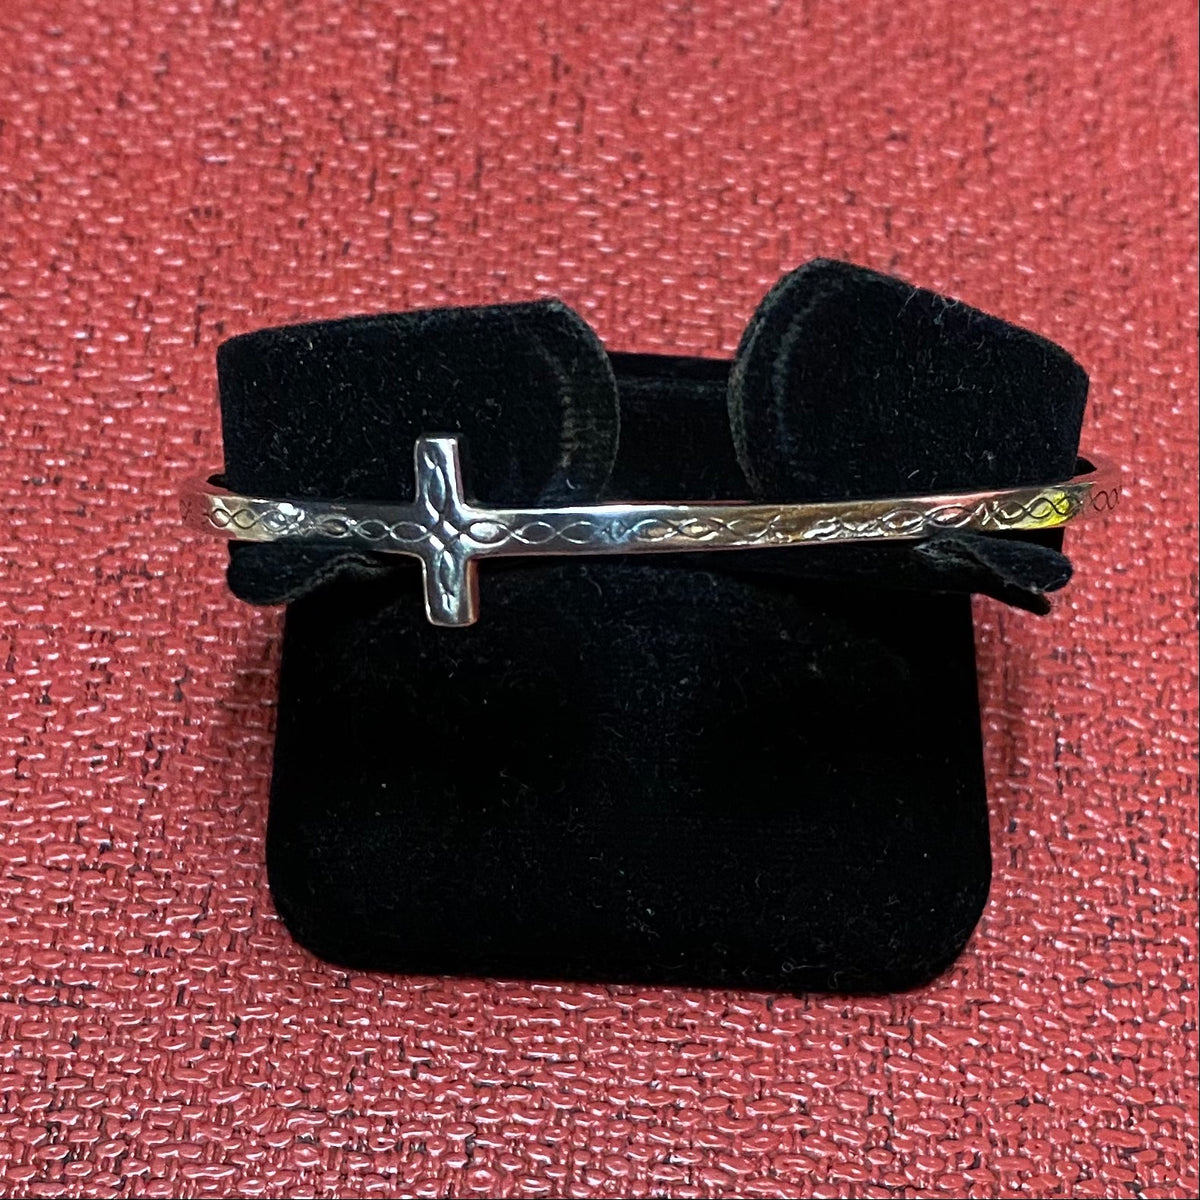 Silver engraved Cross Bracelet